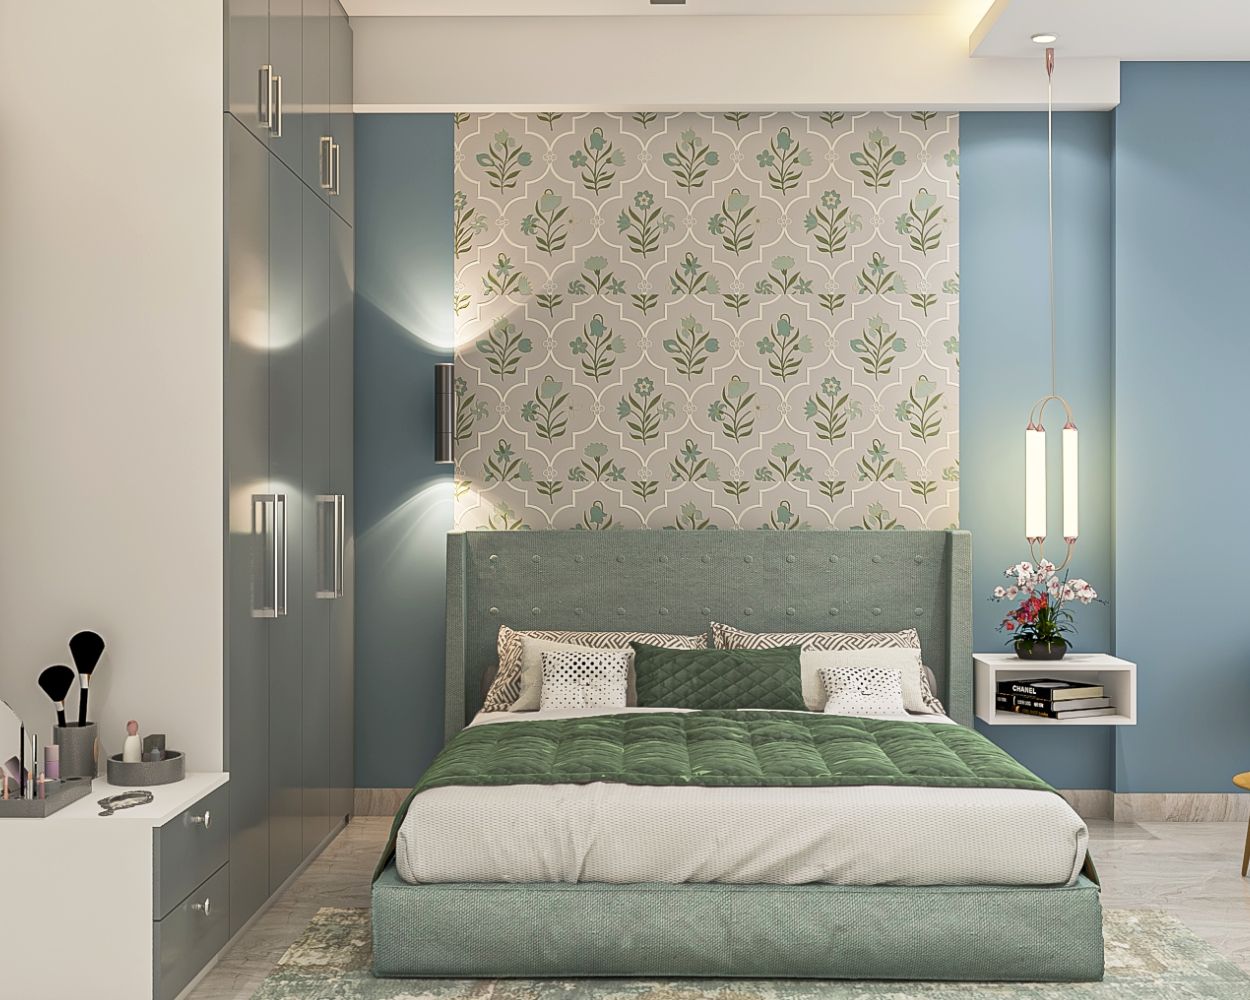 Modern Grey And Green Leaf-Themed Bedroom Wallpaper Design